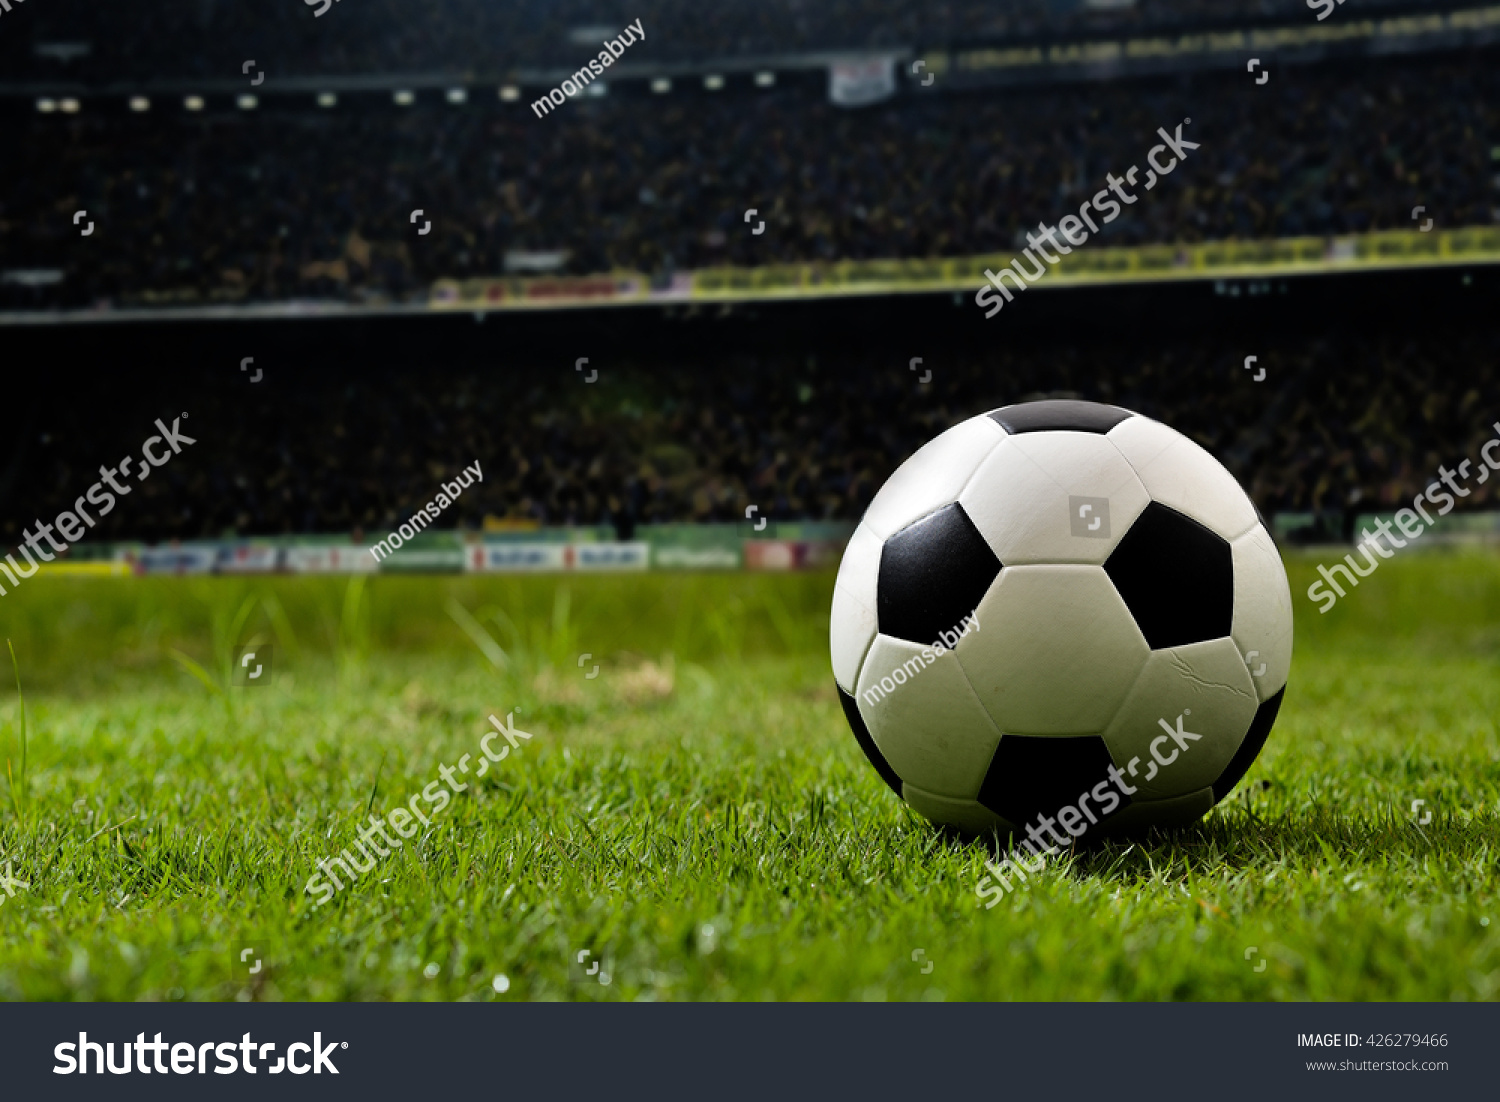 soccer on grass and stadium. #426279466